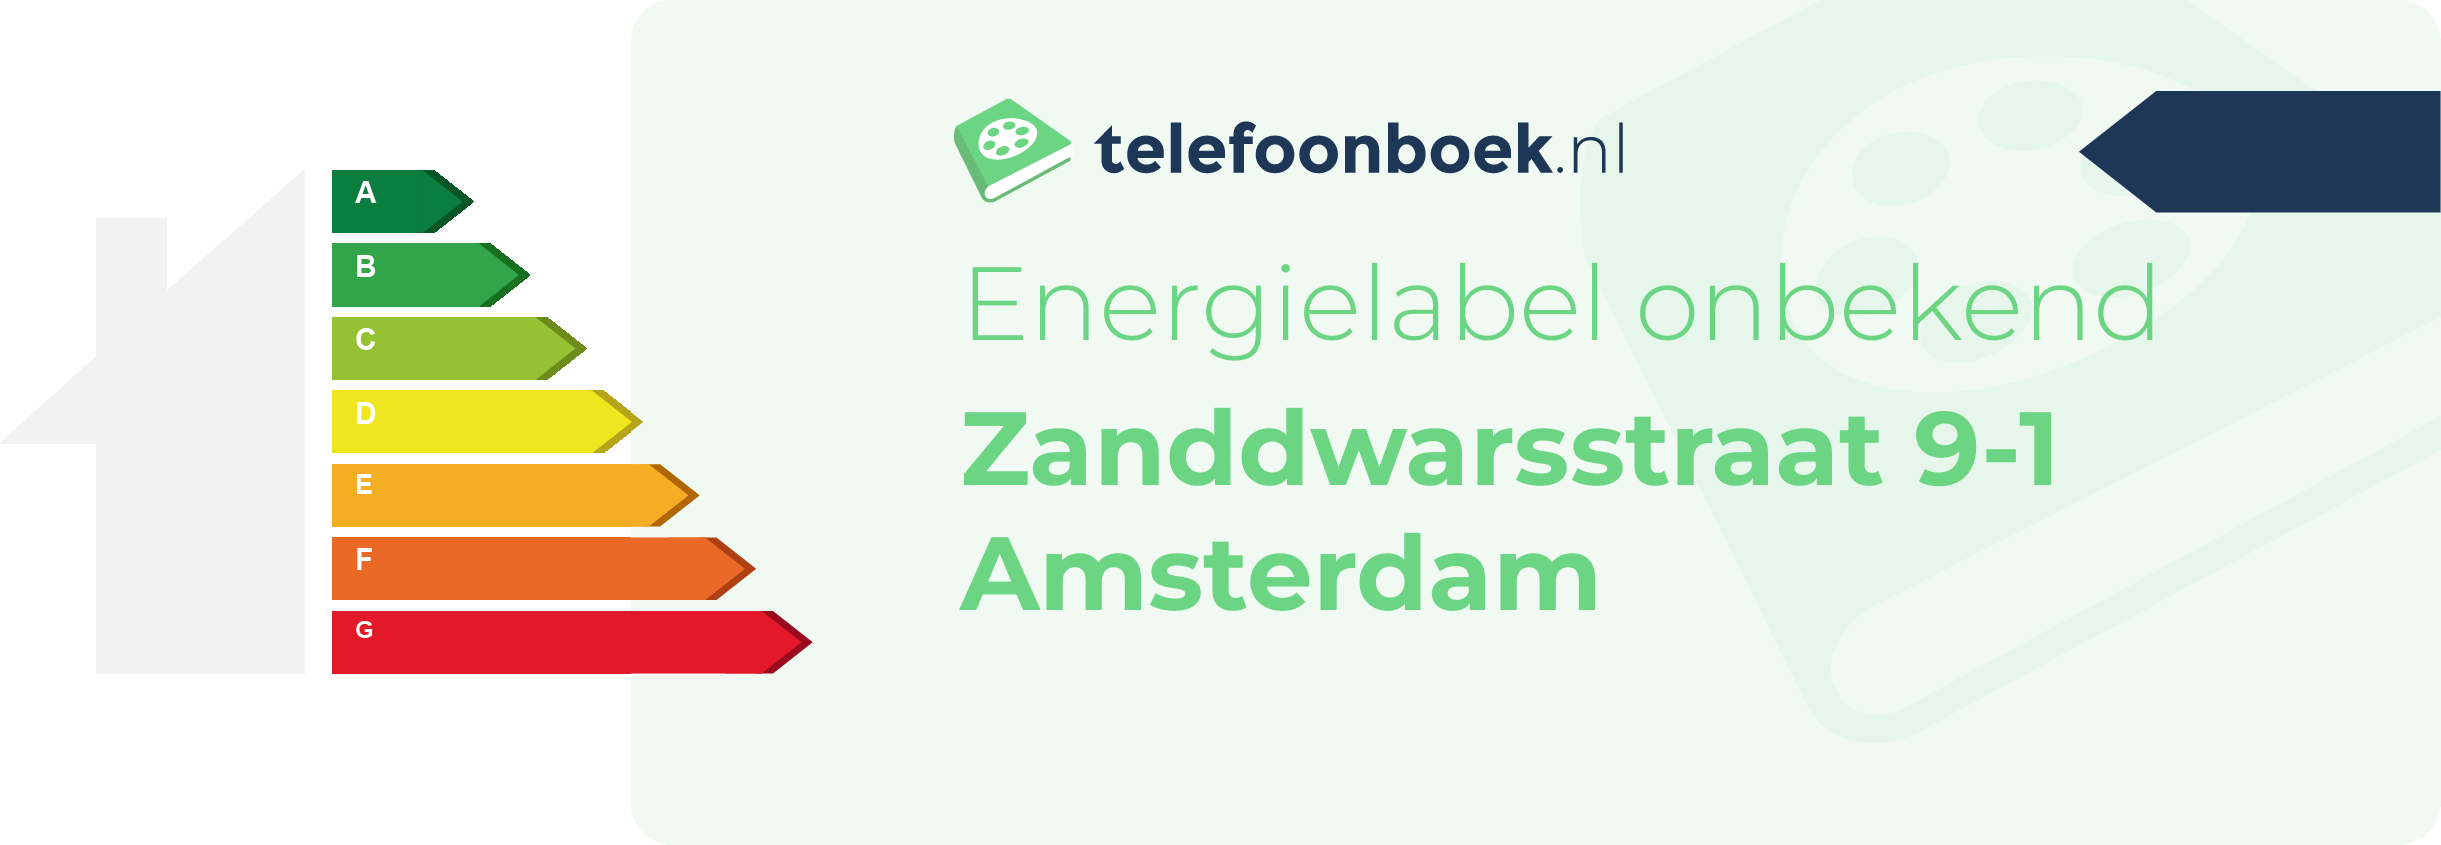 Energielabel Zanddwarsstraat 9-1 Amsterdam